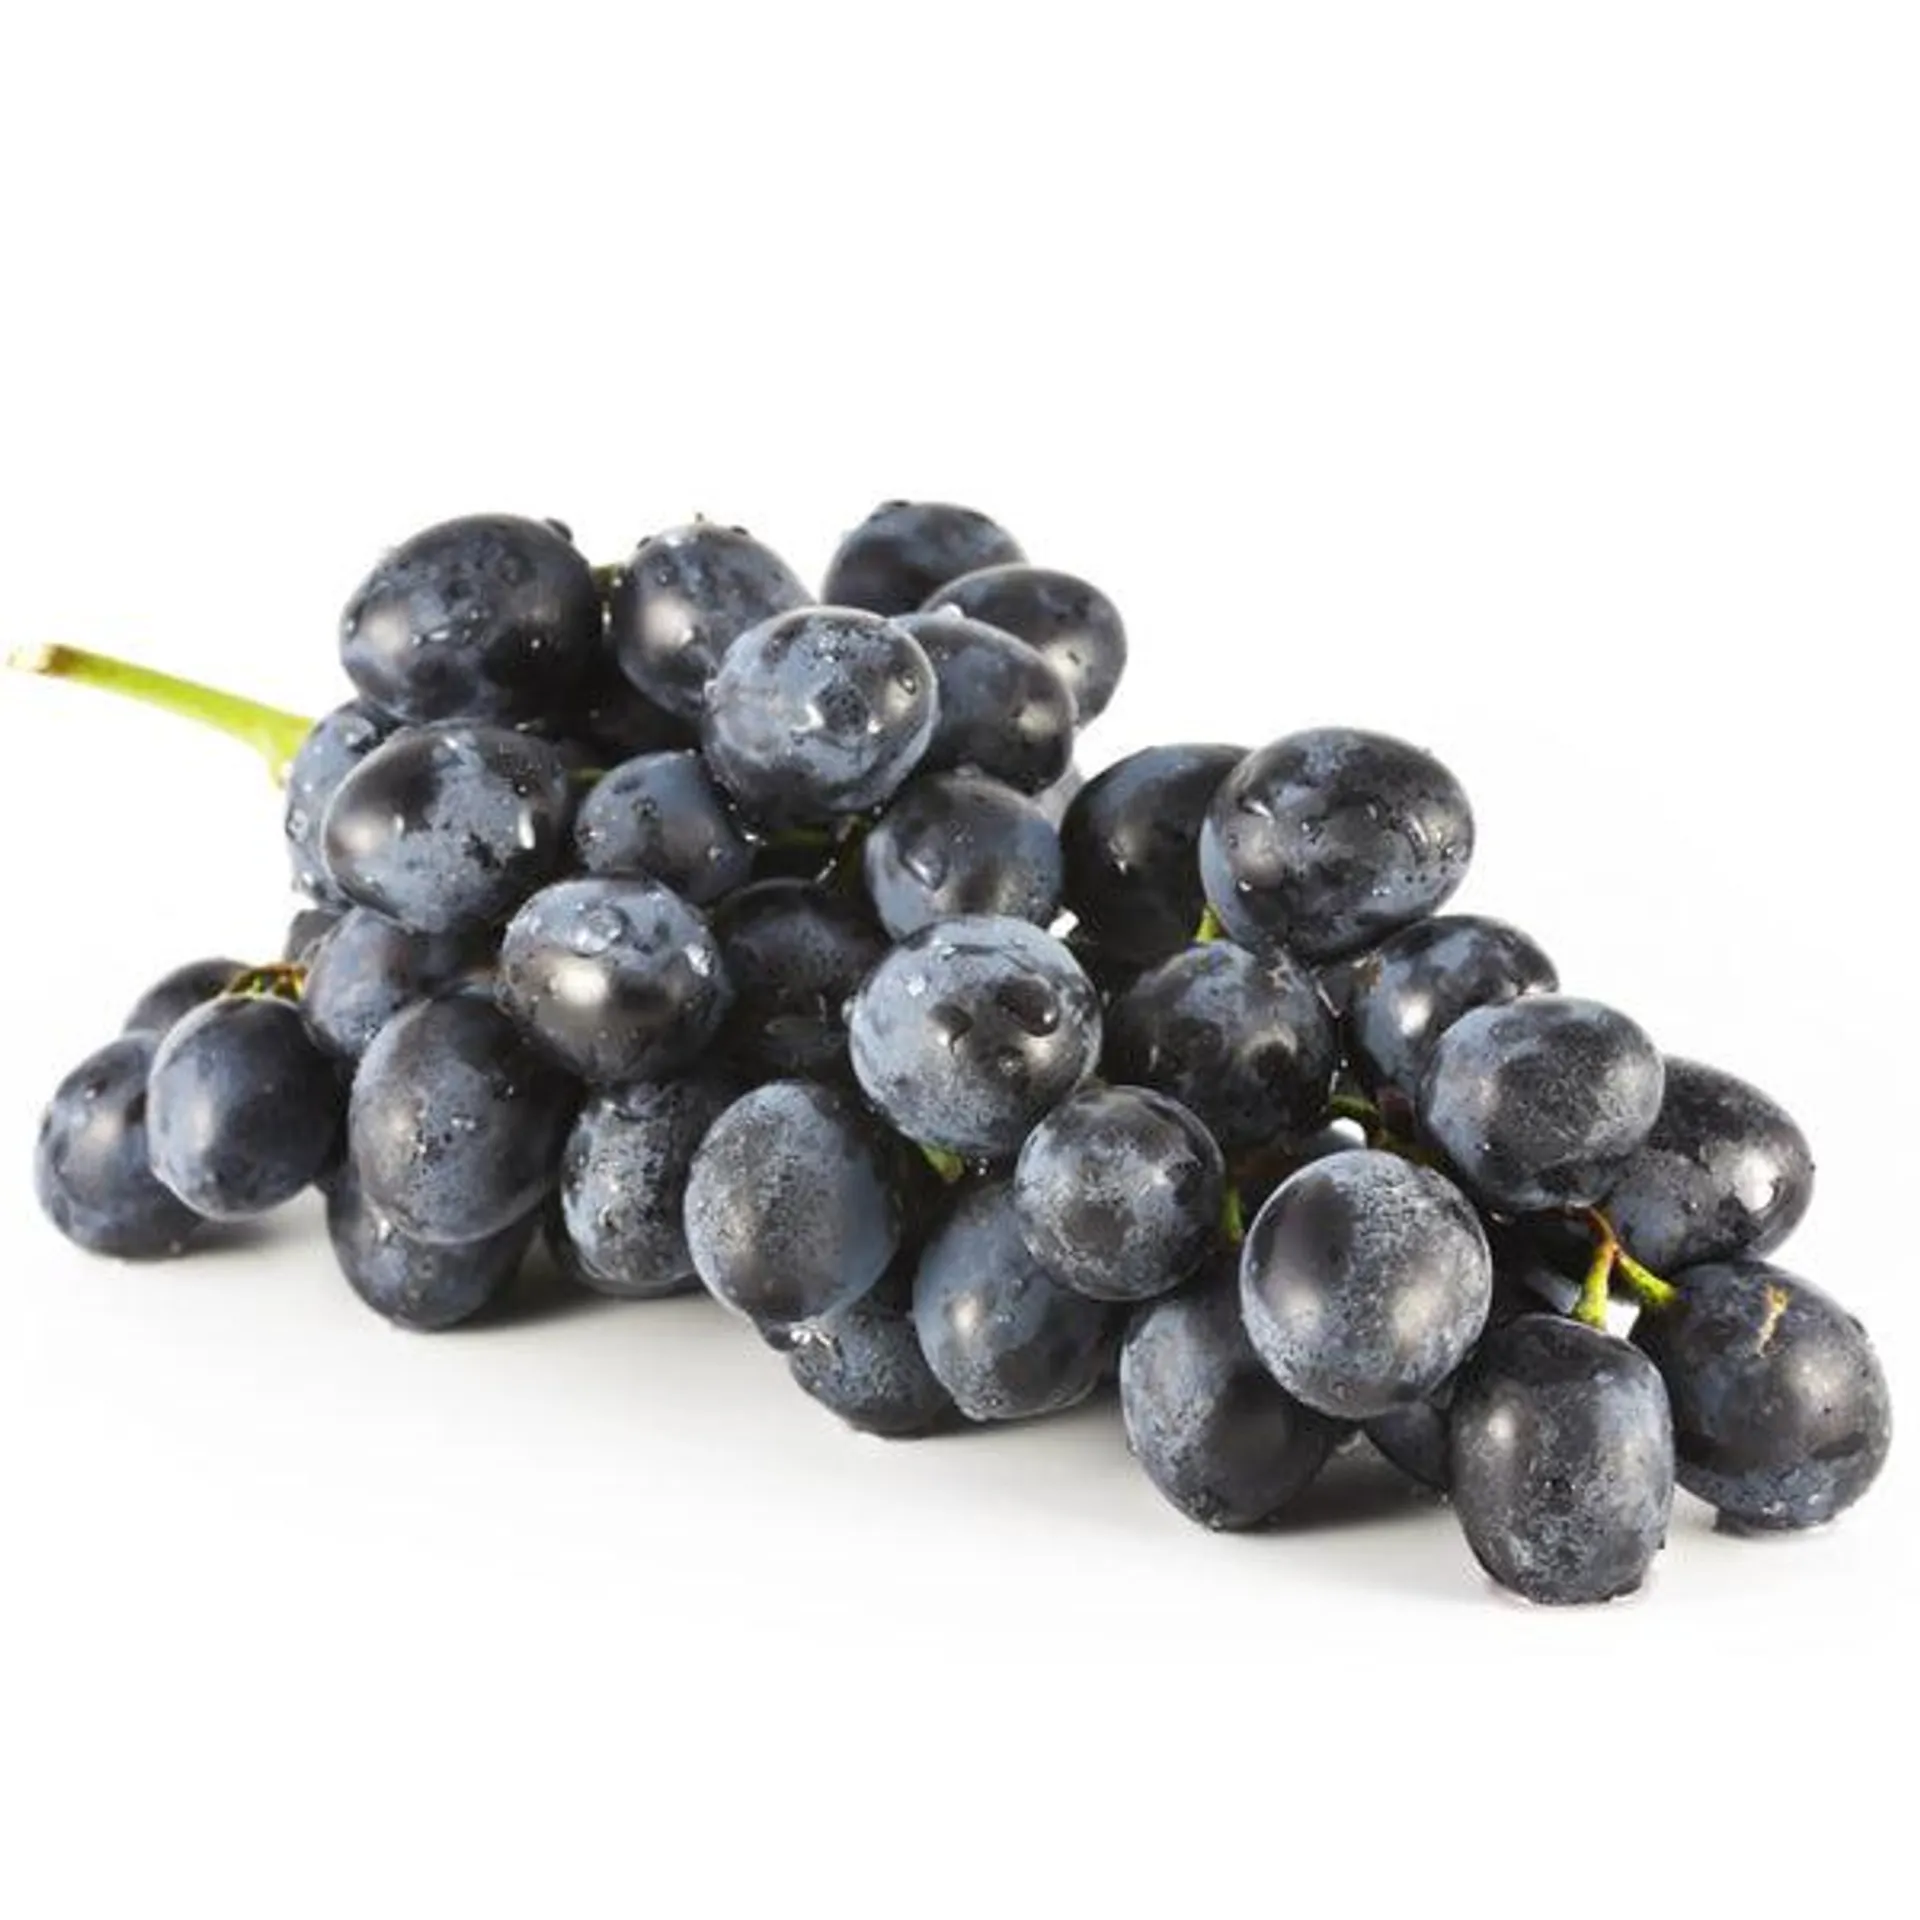 Grapes Black Seedless min 1kg